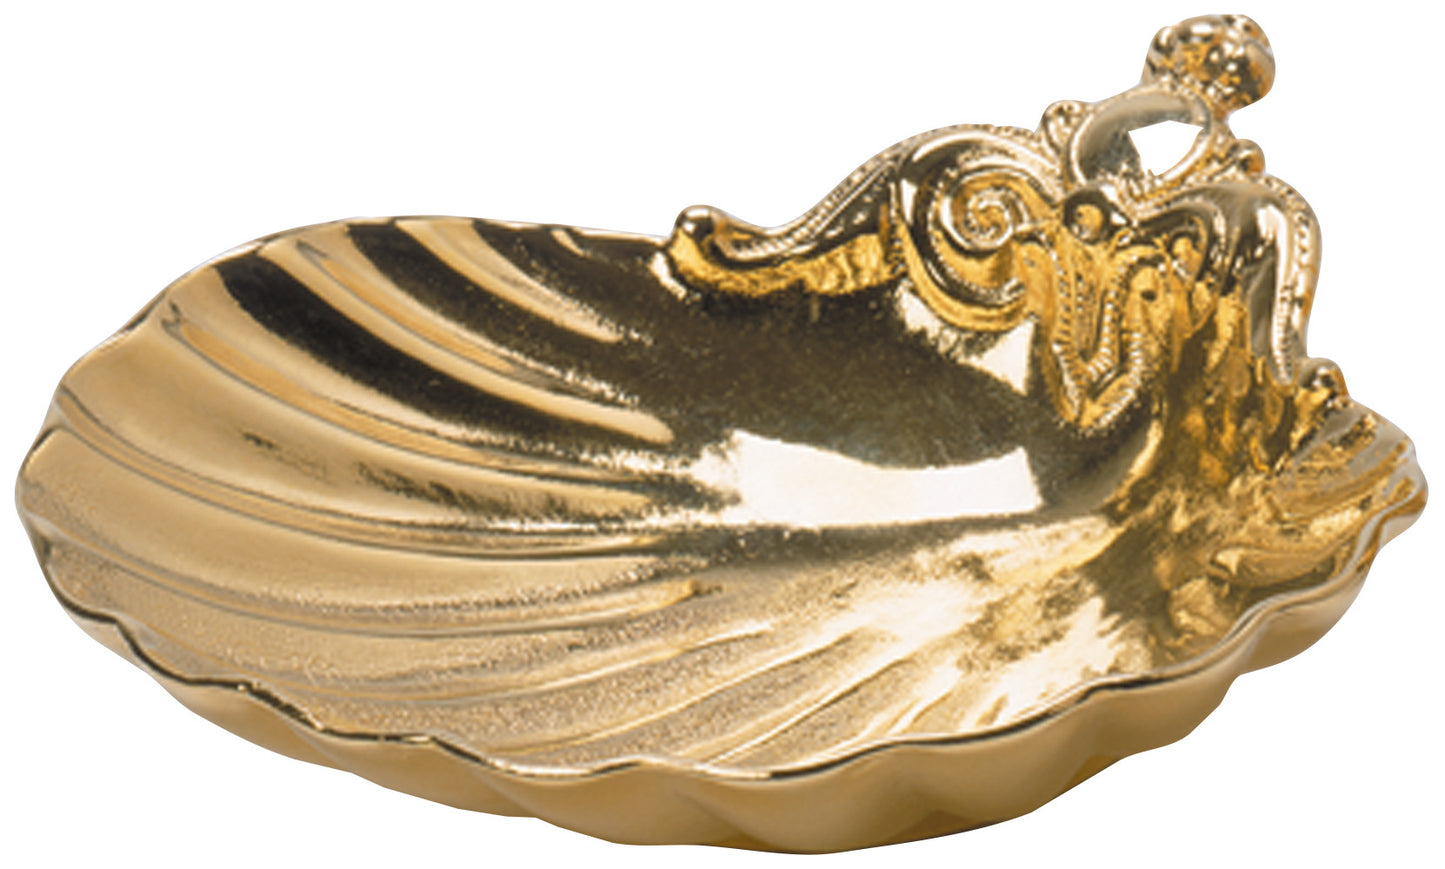 Baptismal Shell - Cast Bronze Gold Plated - K421 - Koleys - Chiarelli's Religious Goods & Church Supply